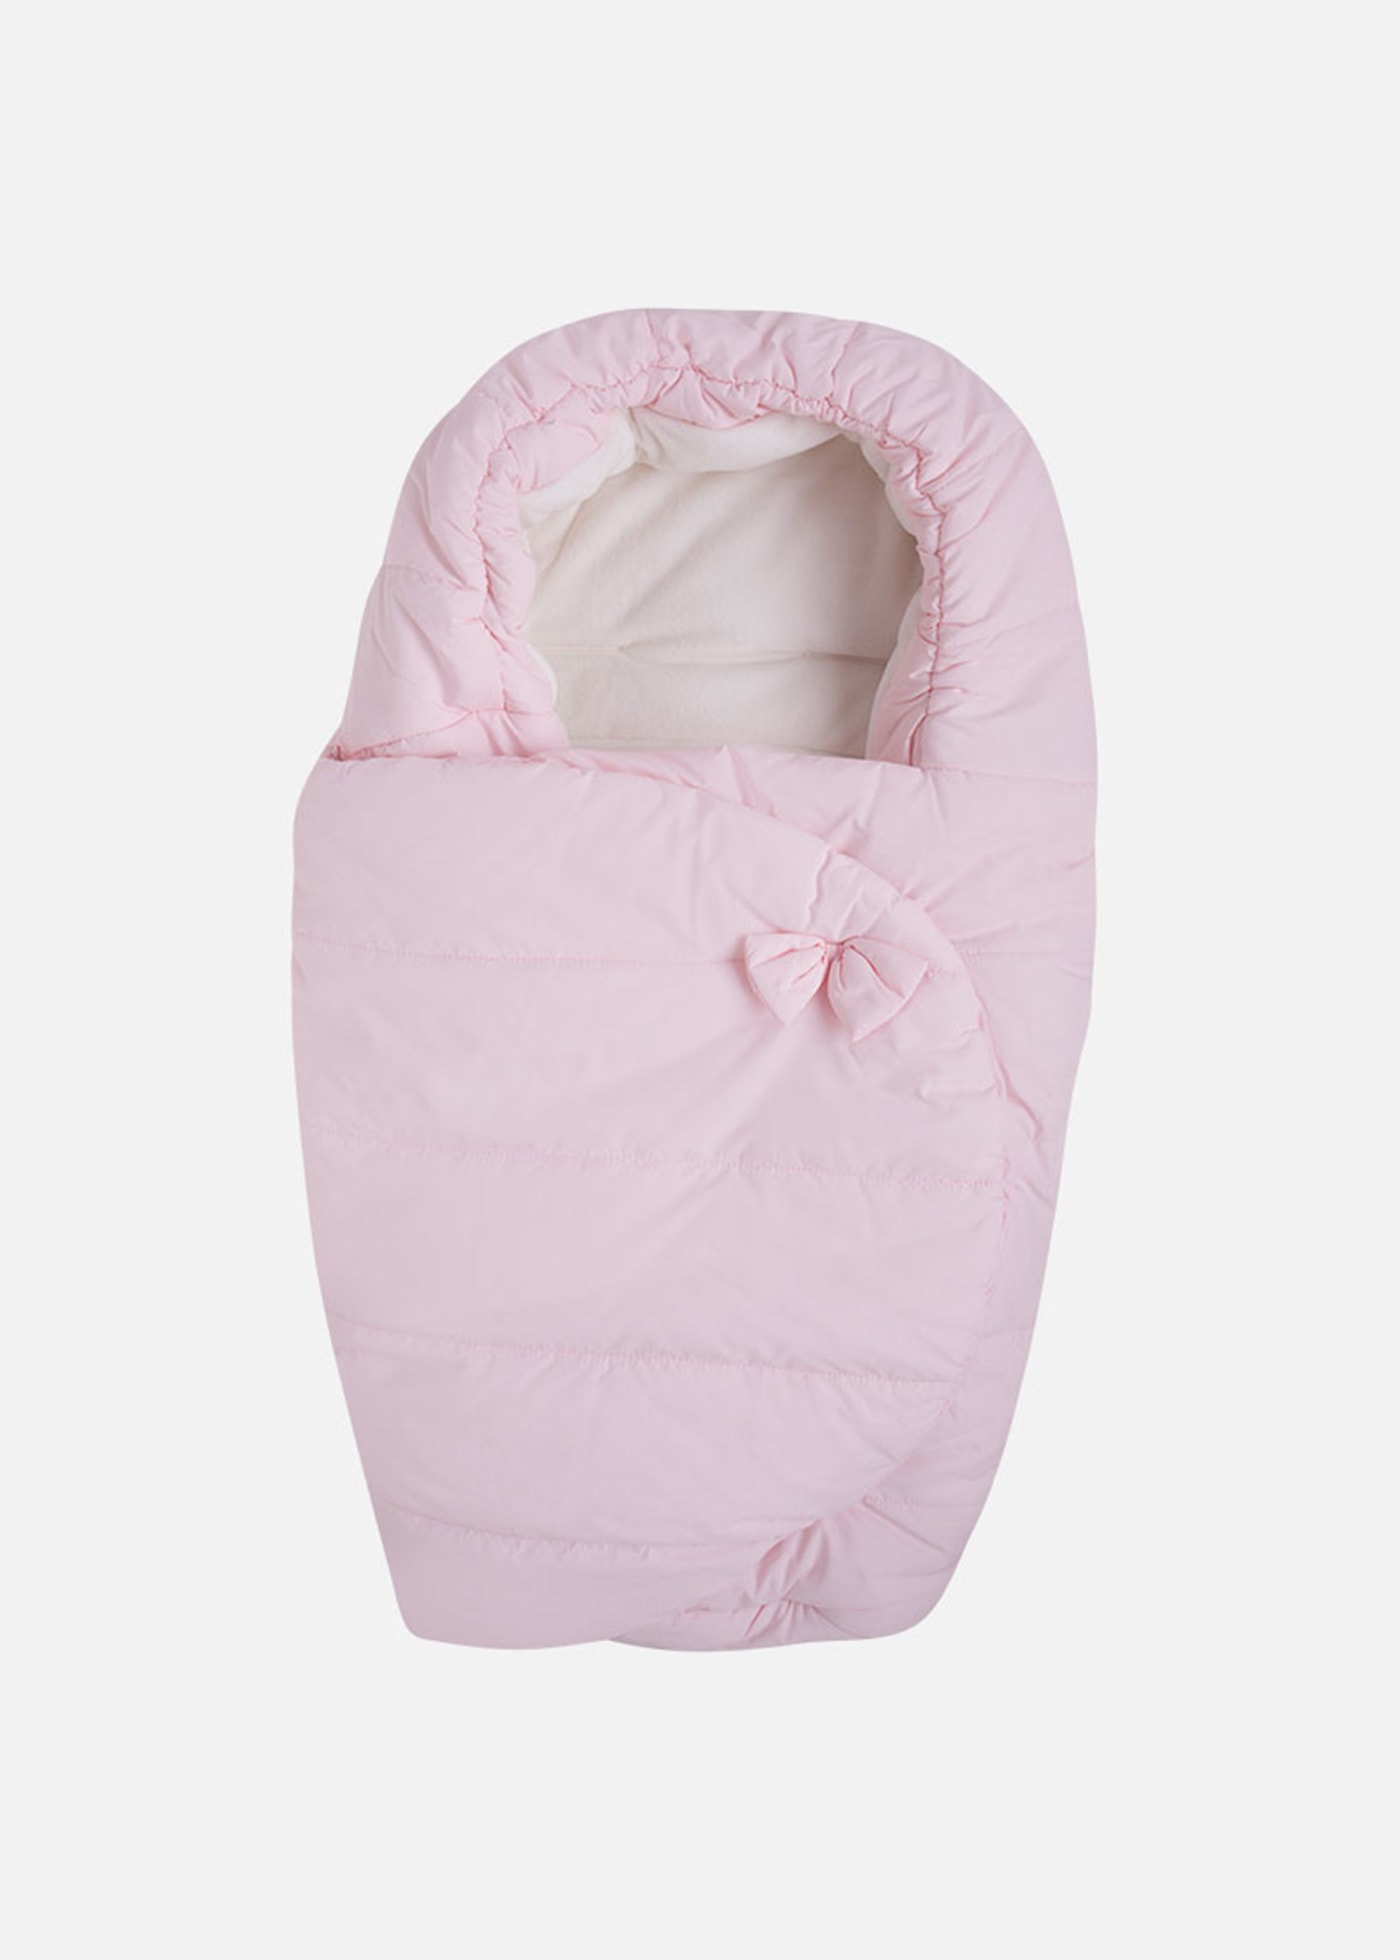 Sleeping bag for baby